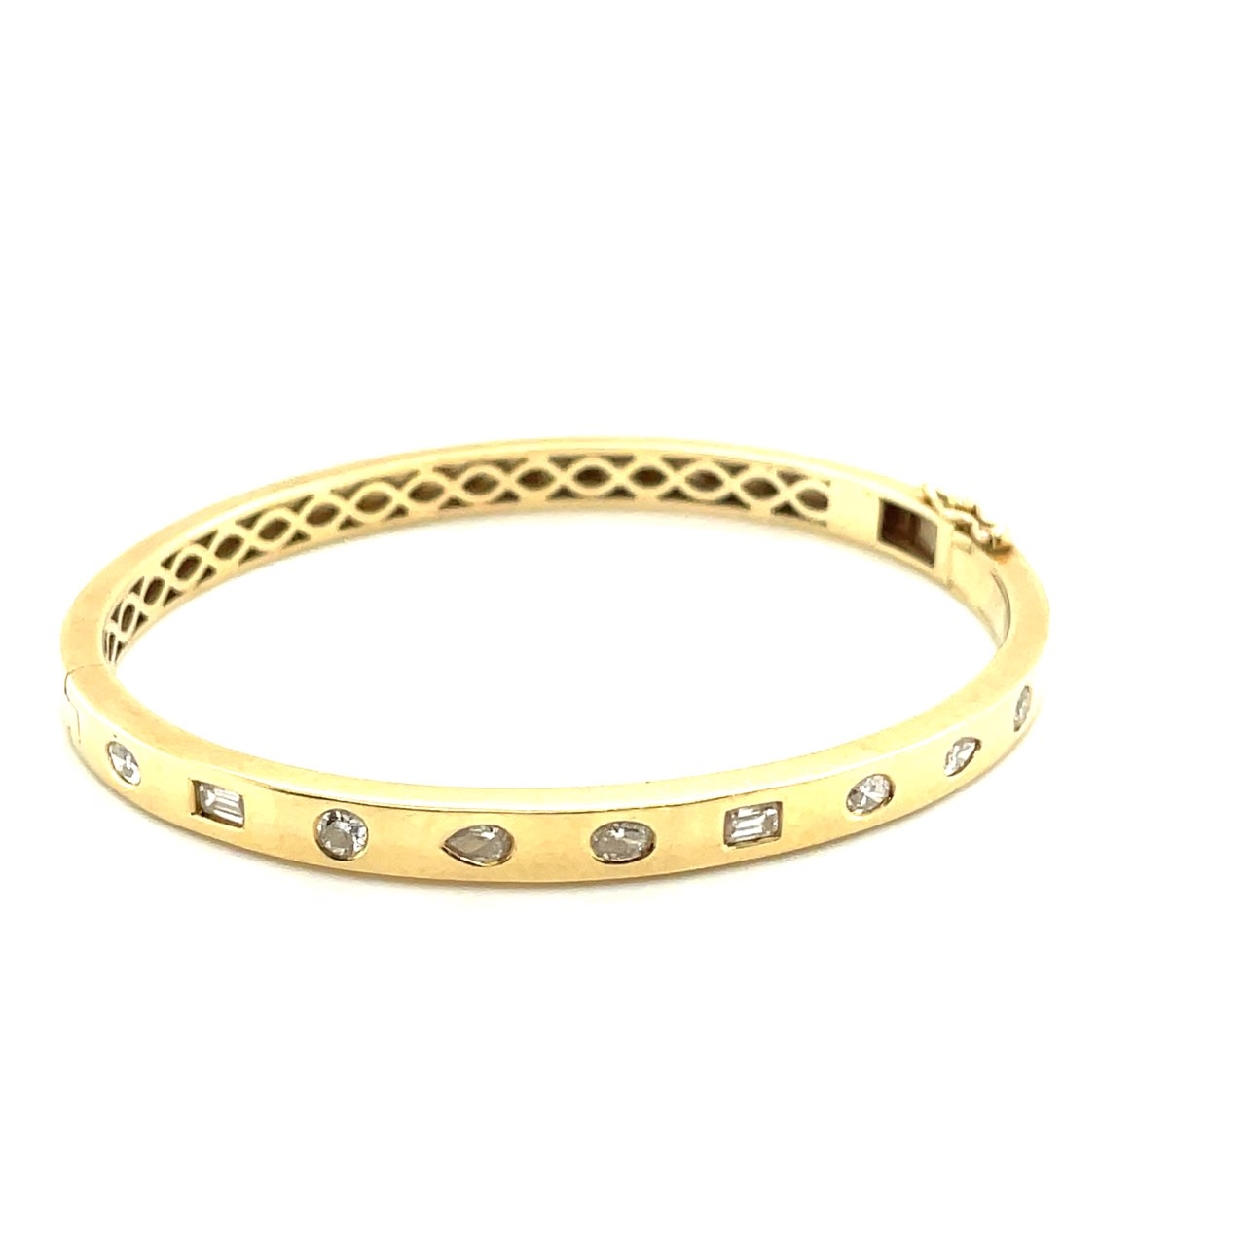 14K Yellow Gold Bracelet with Mixed Cut Diamonds
1 CT
